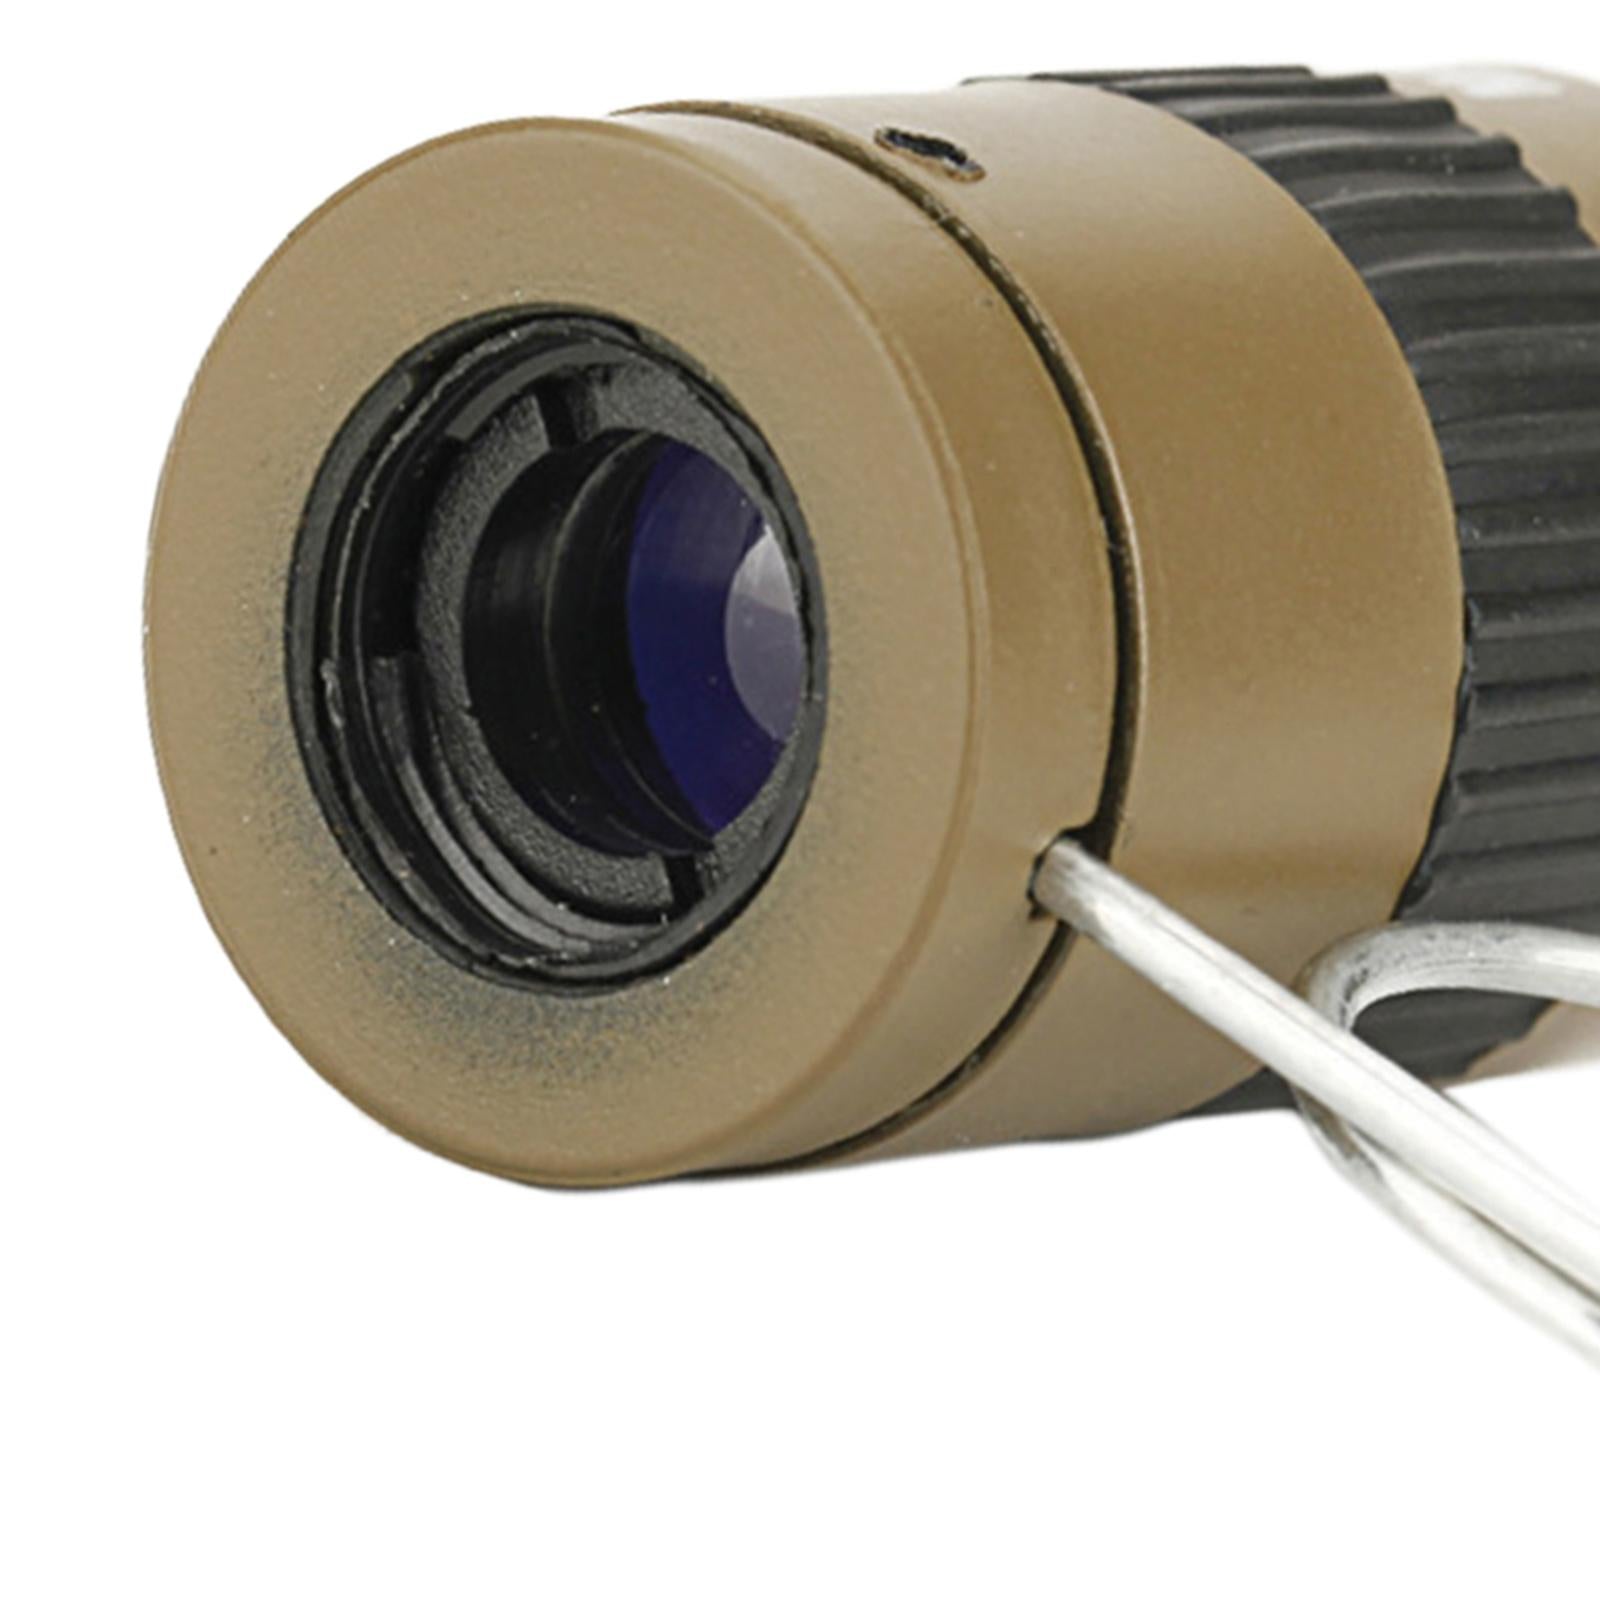 Mini Monocular Telescope 2.5x17.5mm Pocket Lens for Hiking Bird Watching